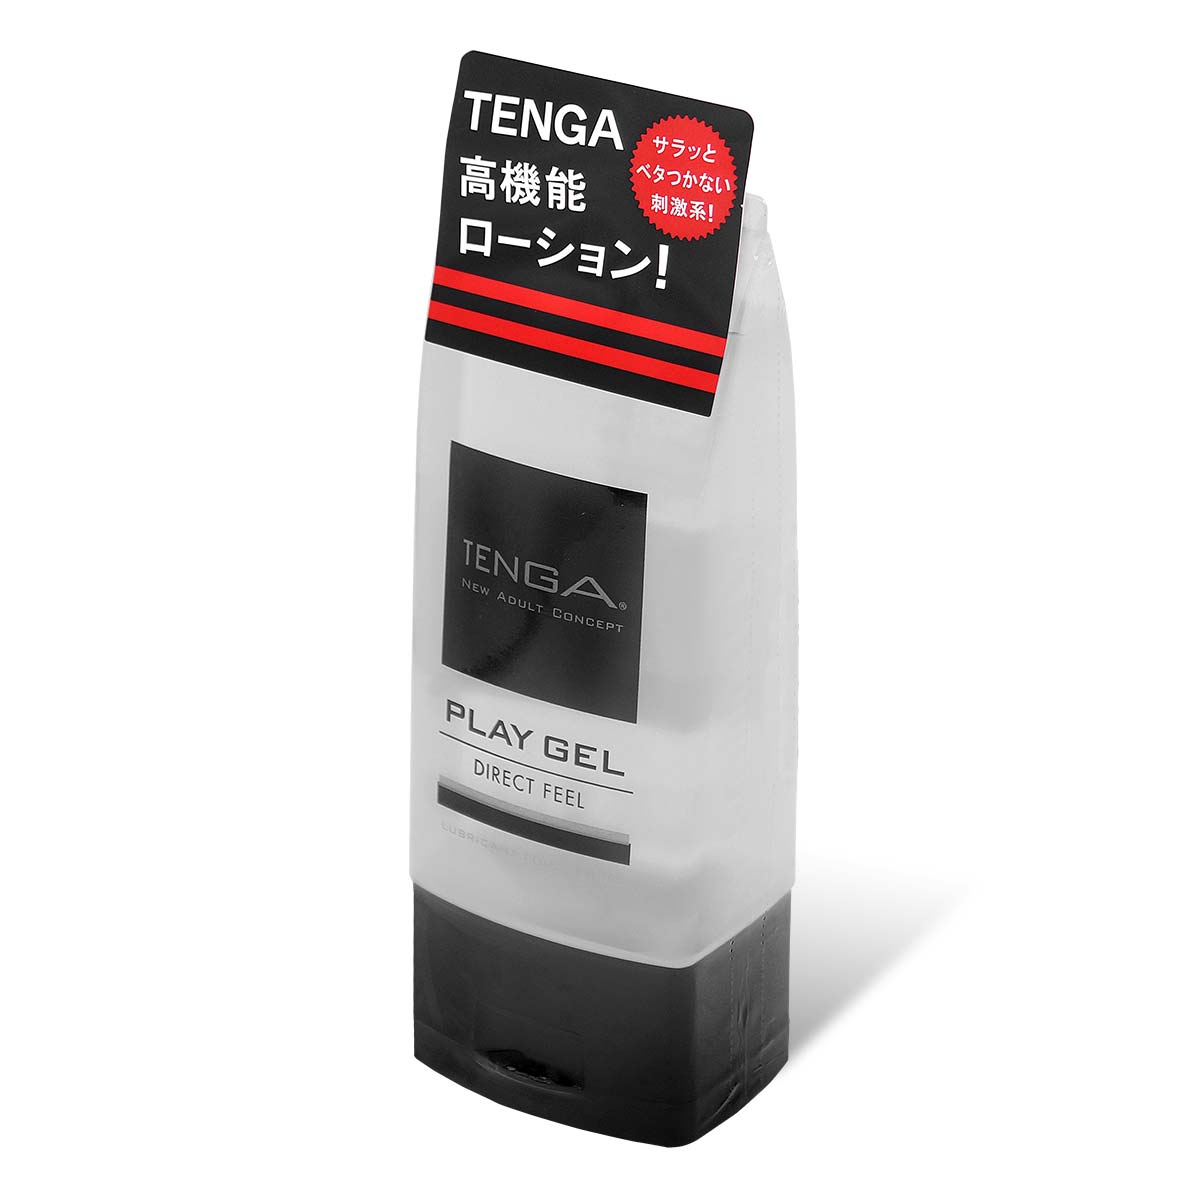 TENGA PLAY GEL DIRECT FEEL 160ml Water-based Lubricant-p_1